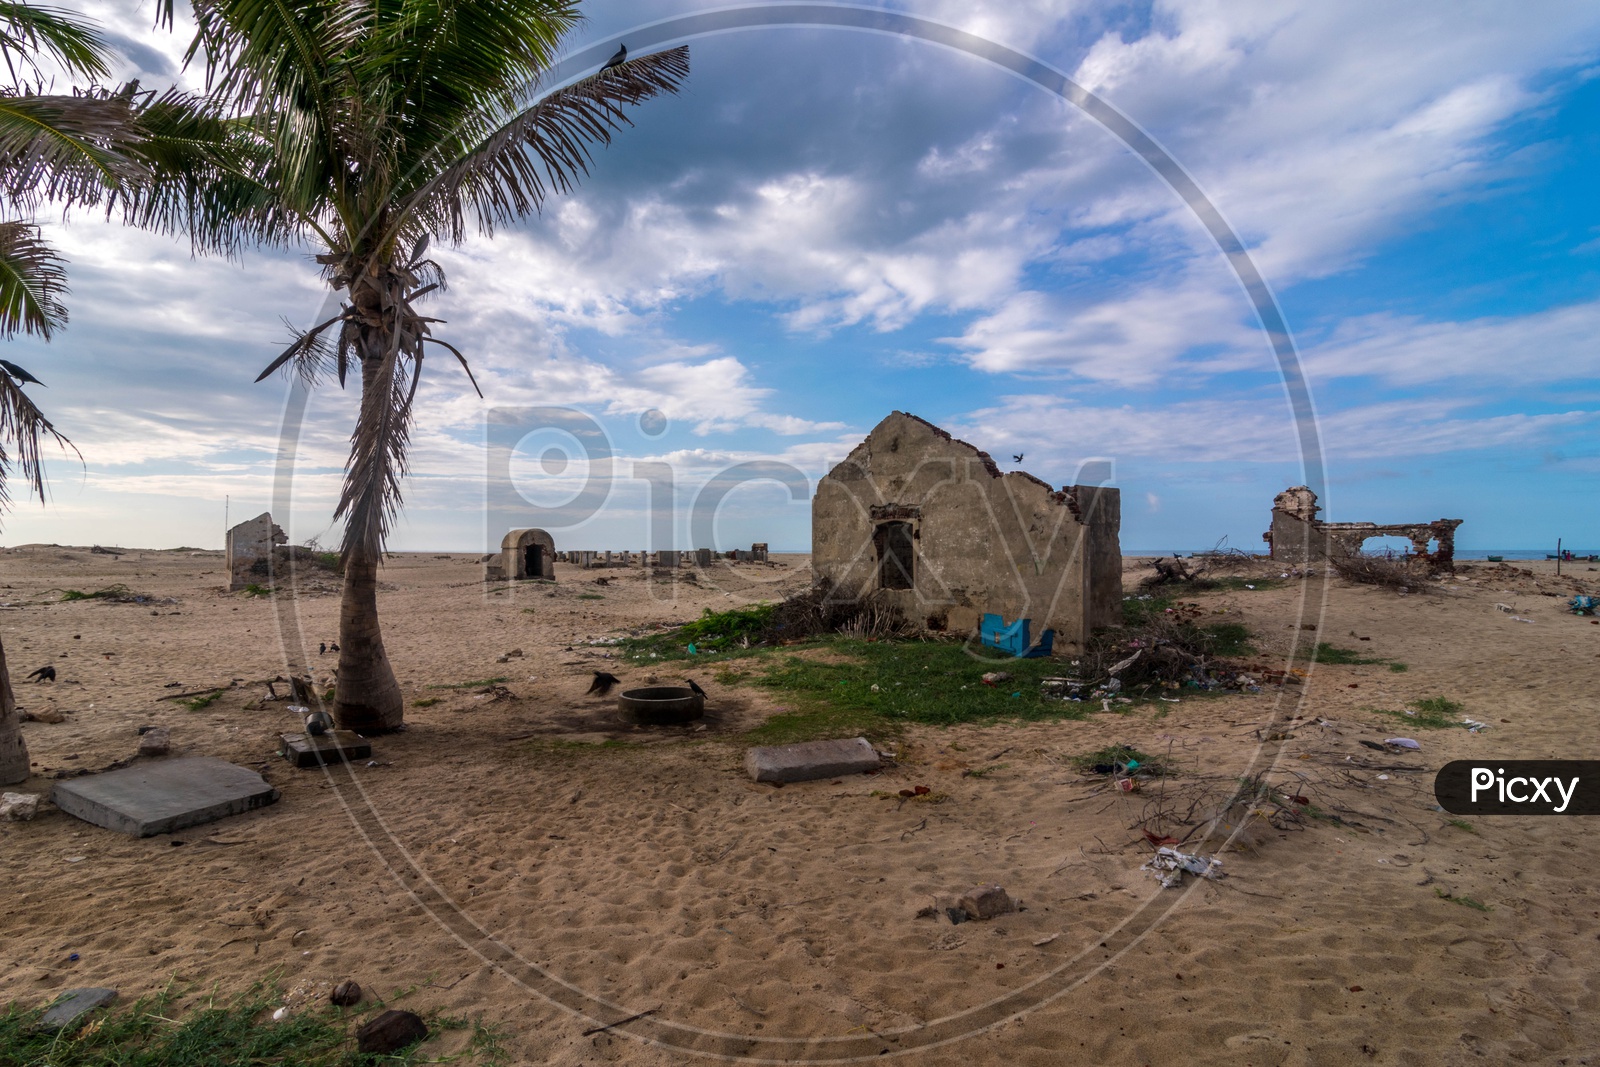 House ruins alongisde the beach